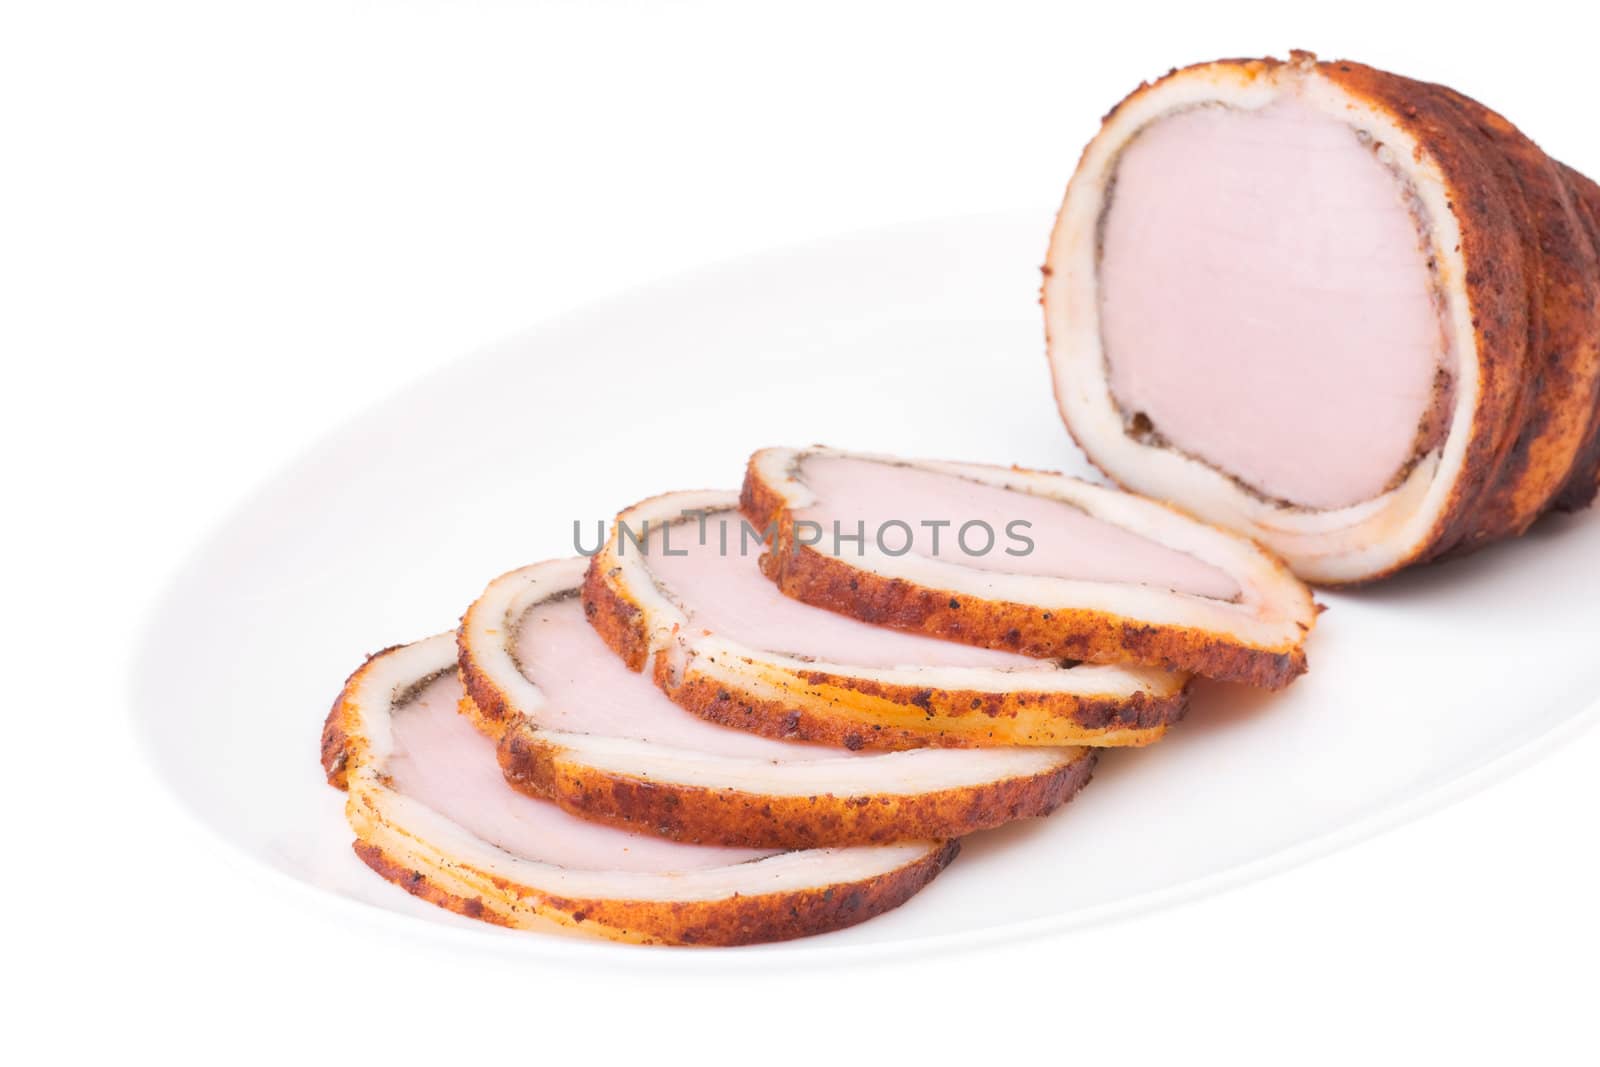 Delicious baked ham with bacon. Bon appetit! by rozhenyuk